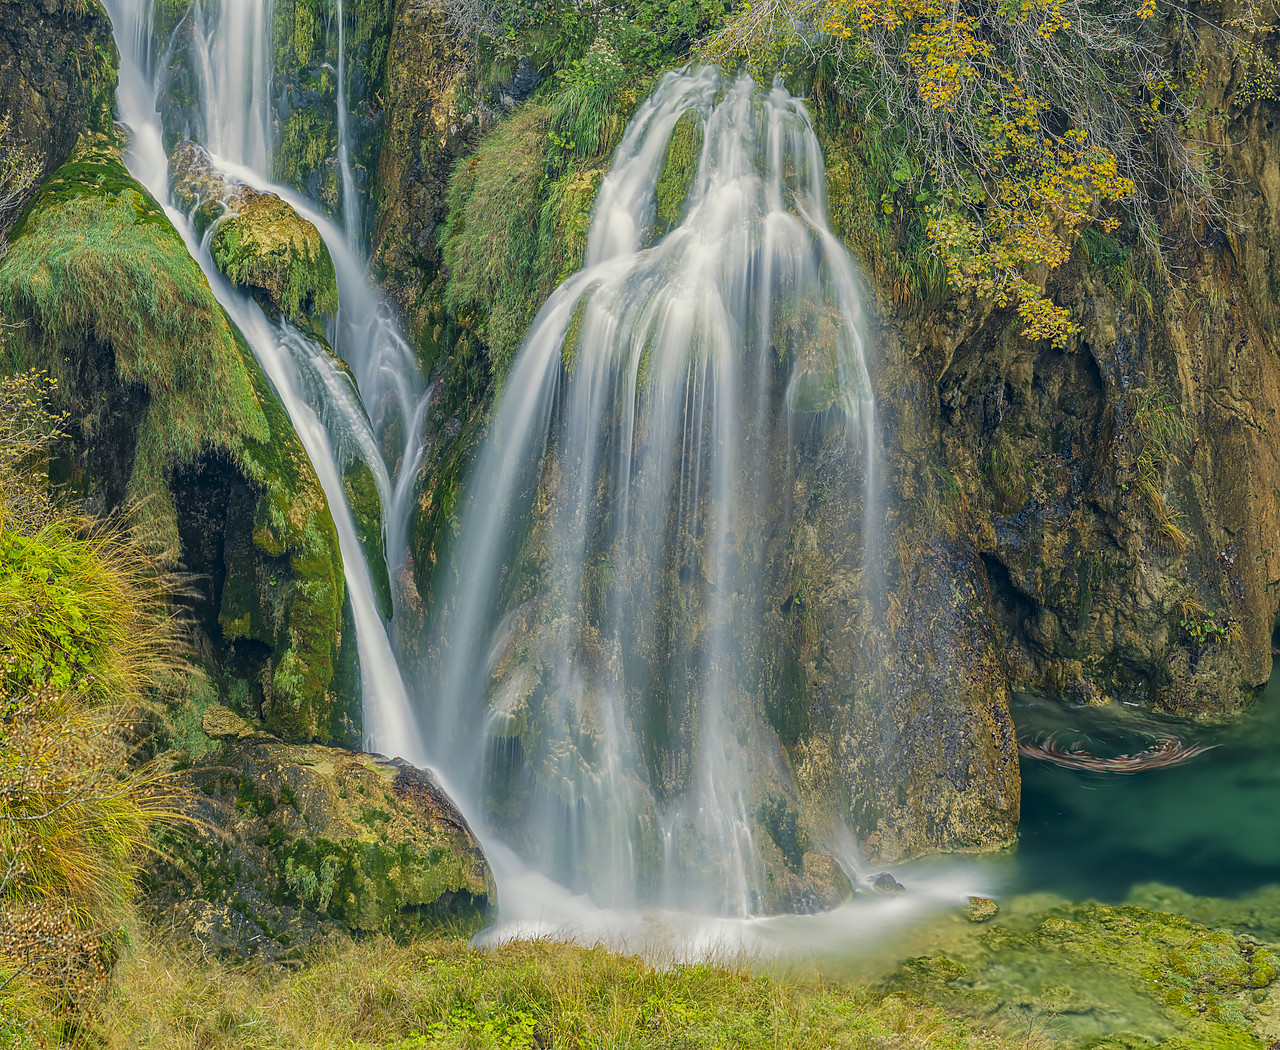 #180439-1 - Waterfall in Plitvice National Park, Croatia